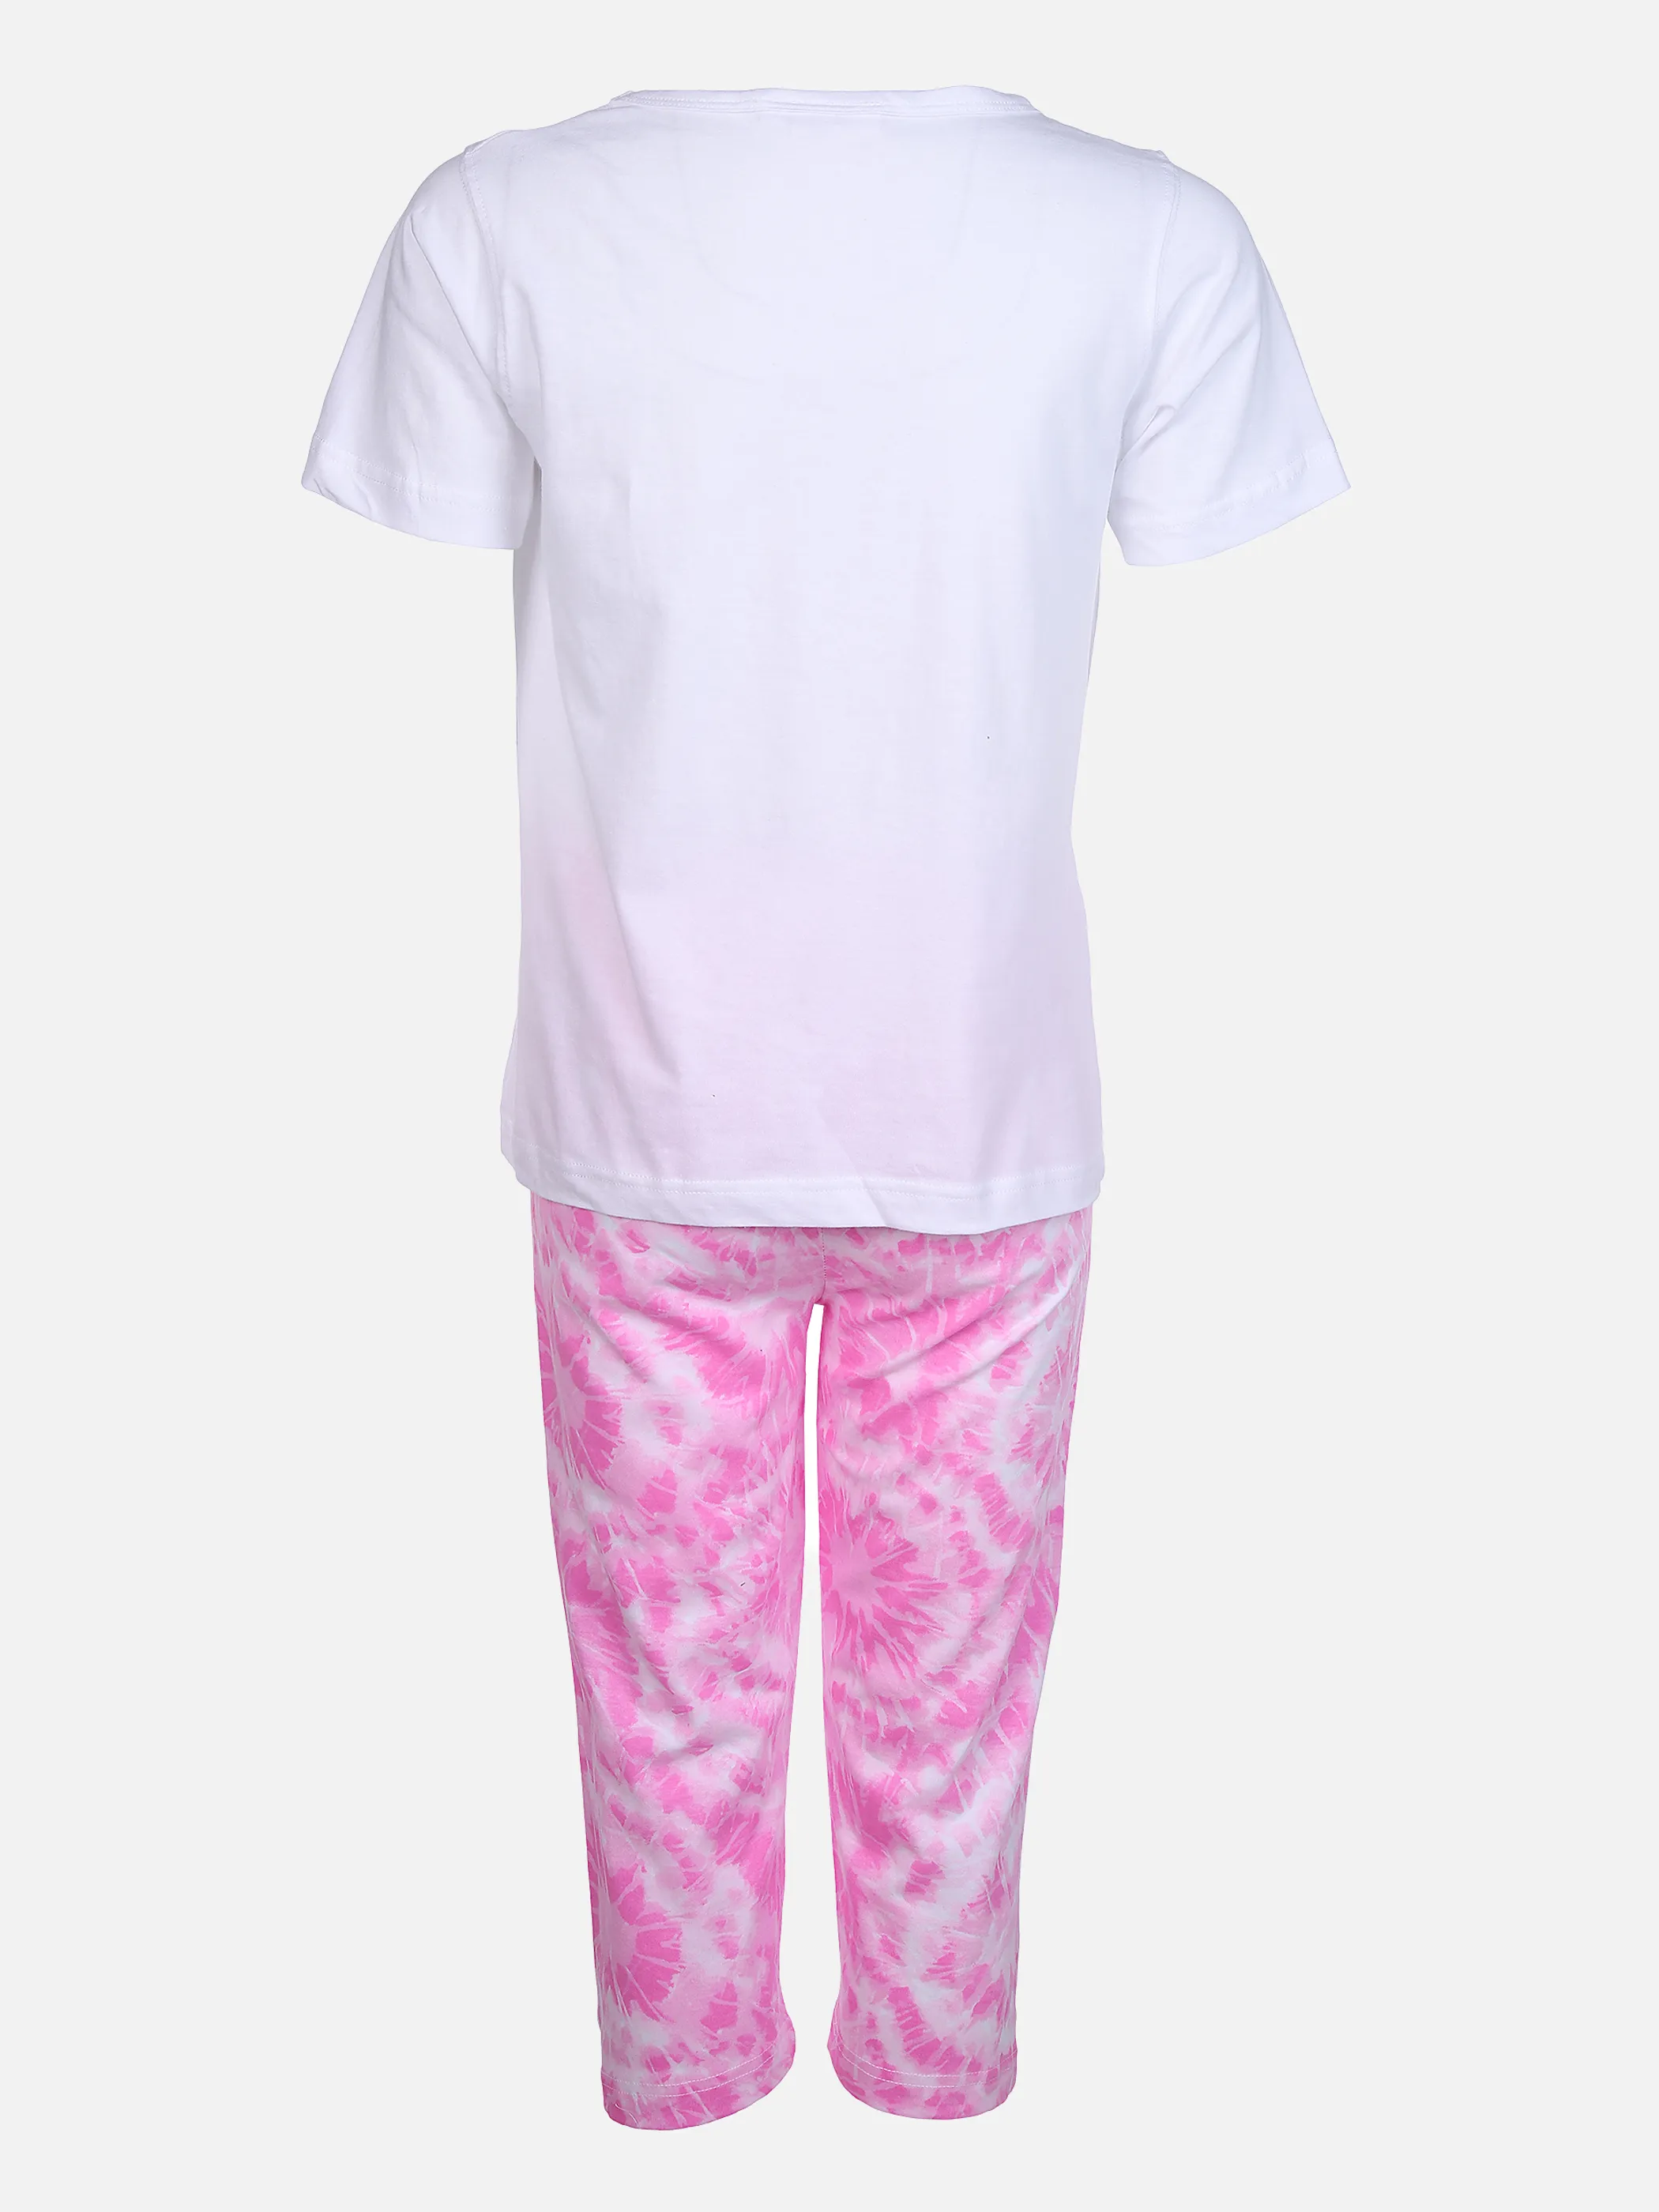 Stop + Go TG Pyjama Set Shirt +3/4 Pant Blau 862754 ROSE/BLUE 2